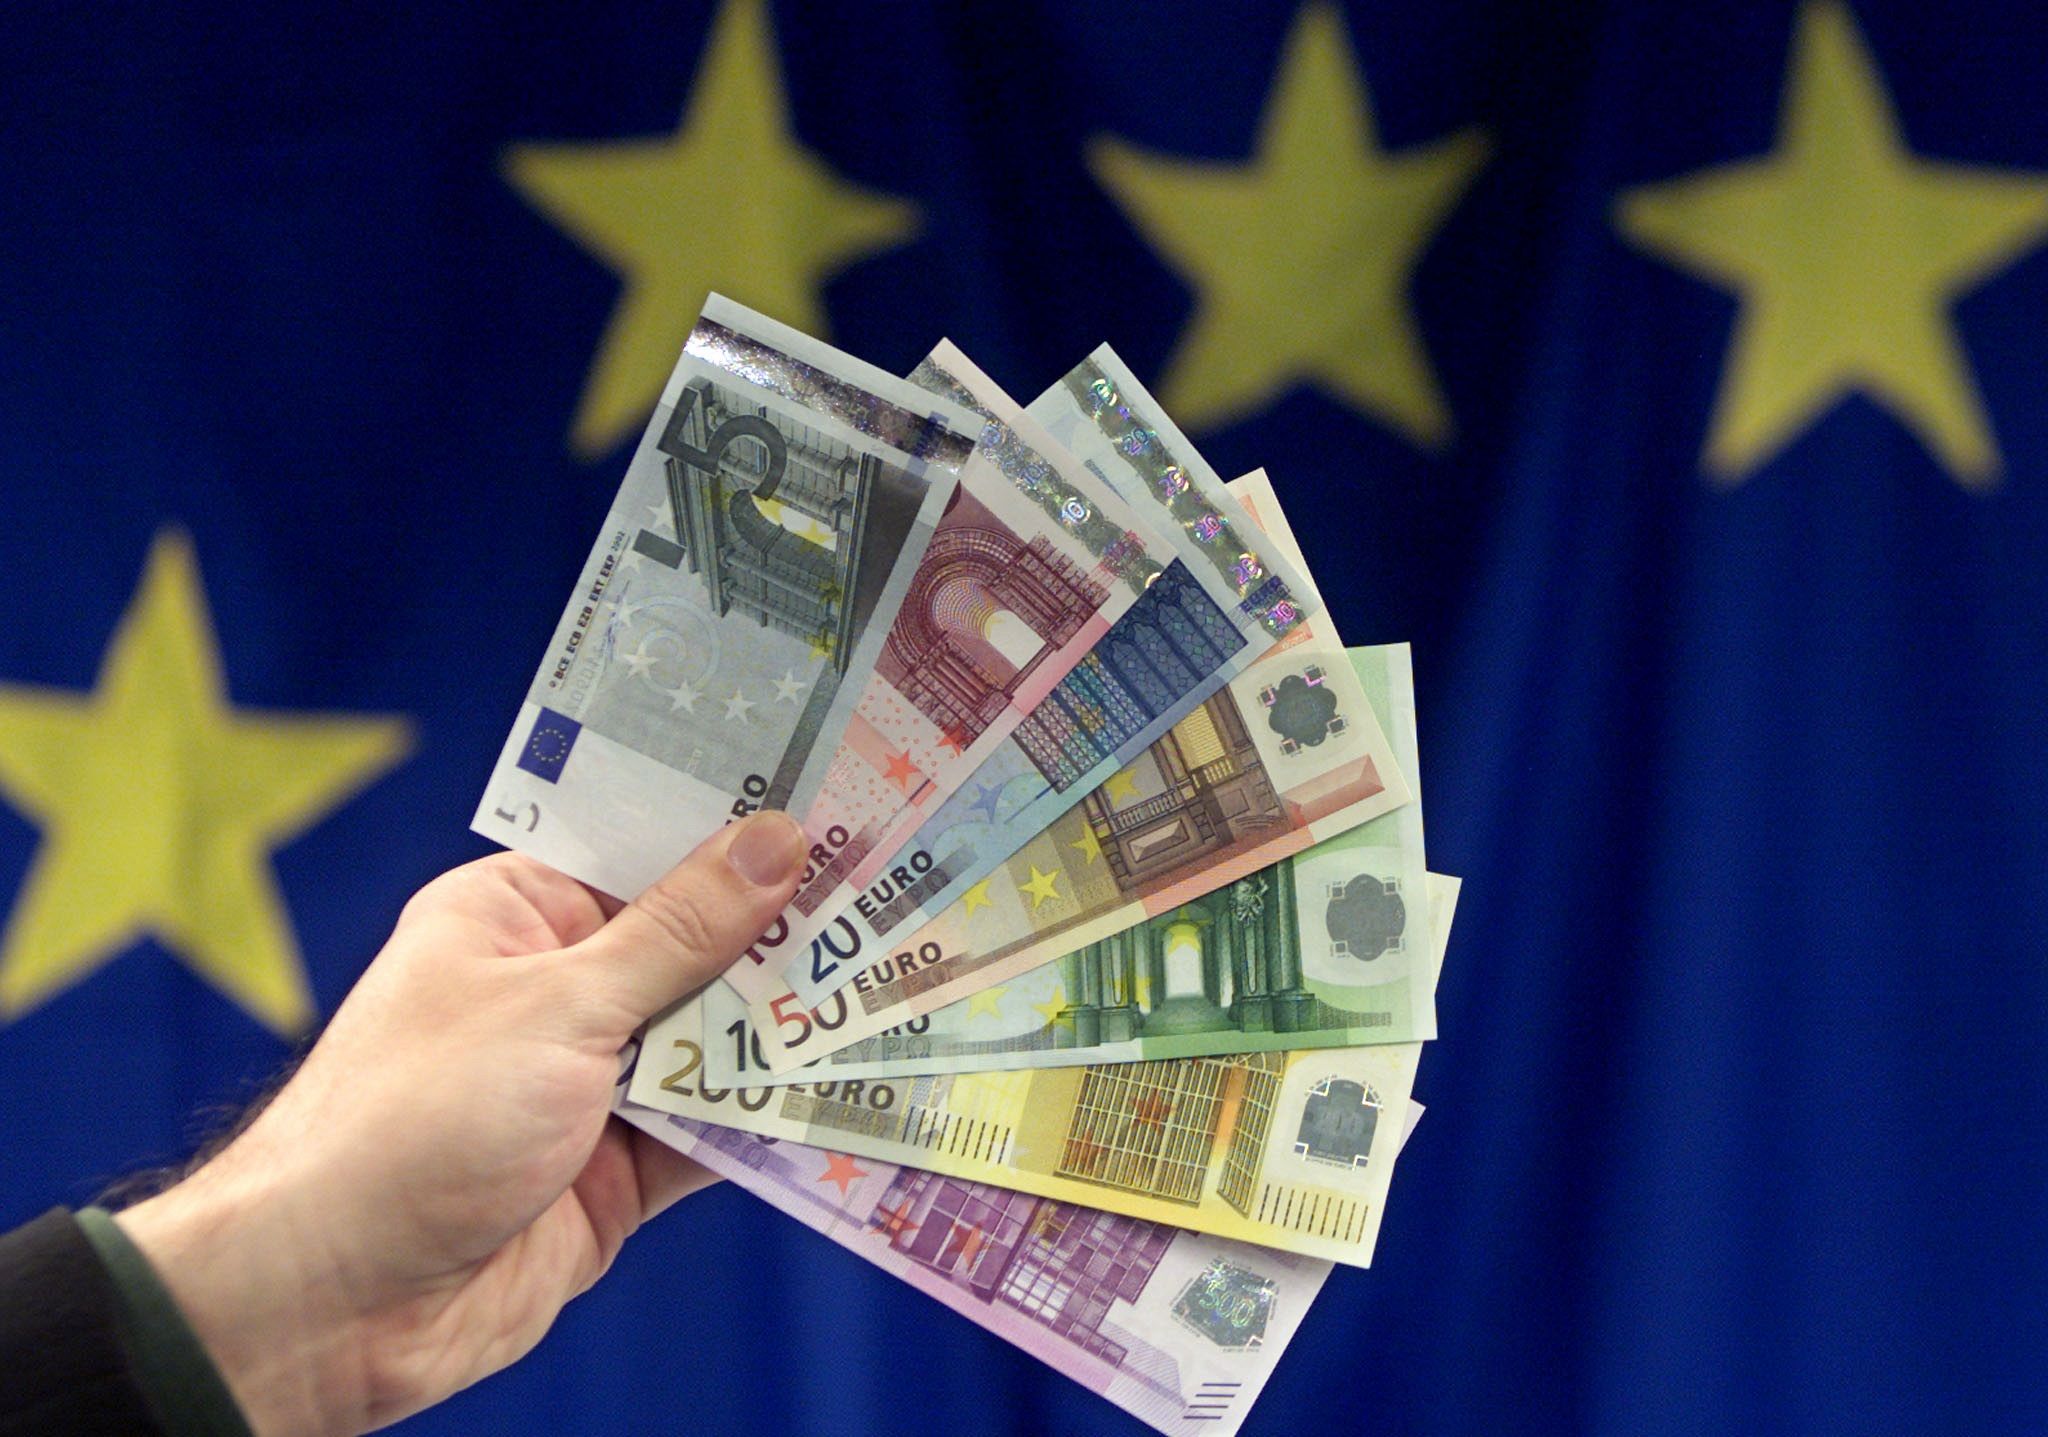 Доллар евро европа. Деньги Евросоюза. Деньги евро. Валюта Евросоюза. Единая валюта Евросоюза.